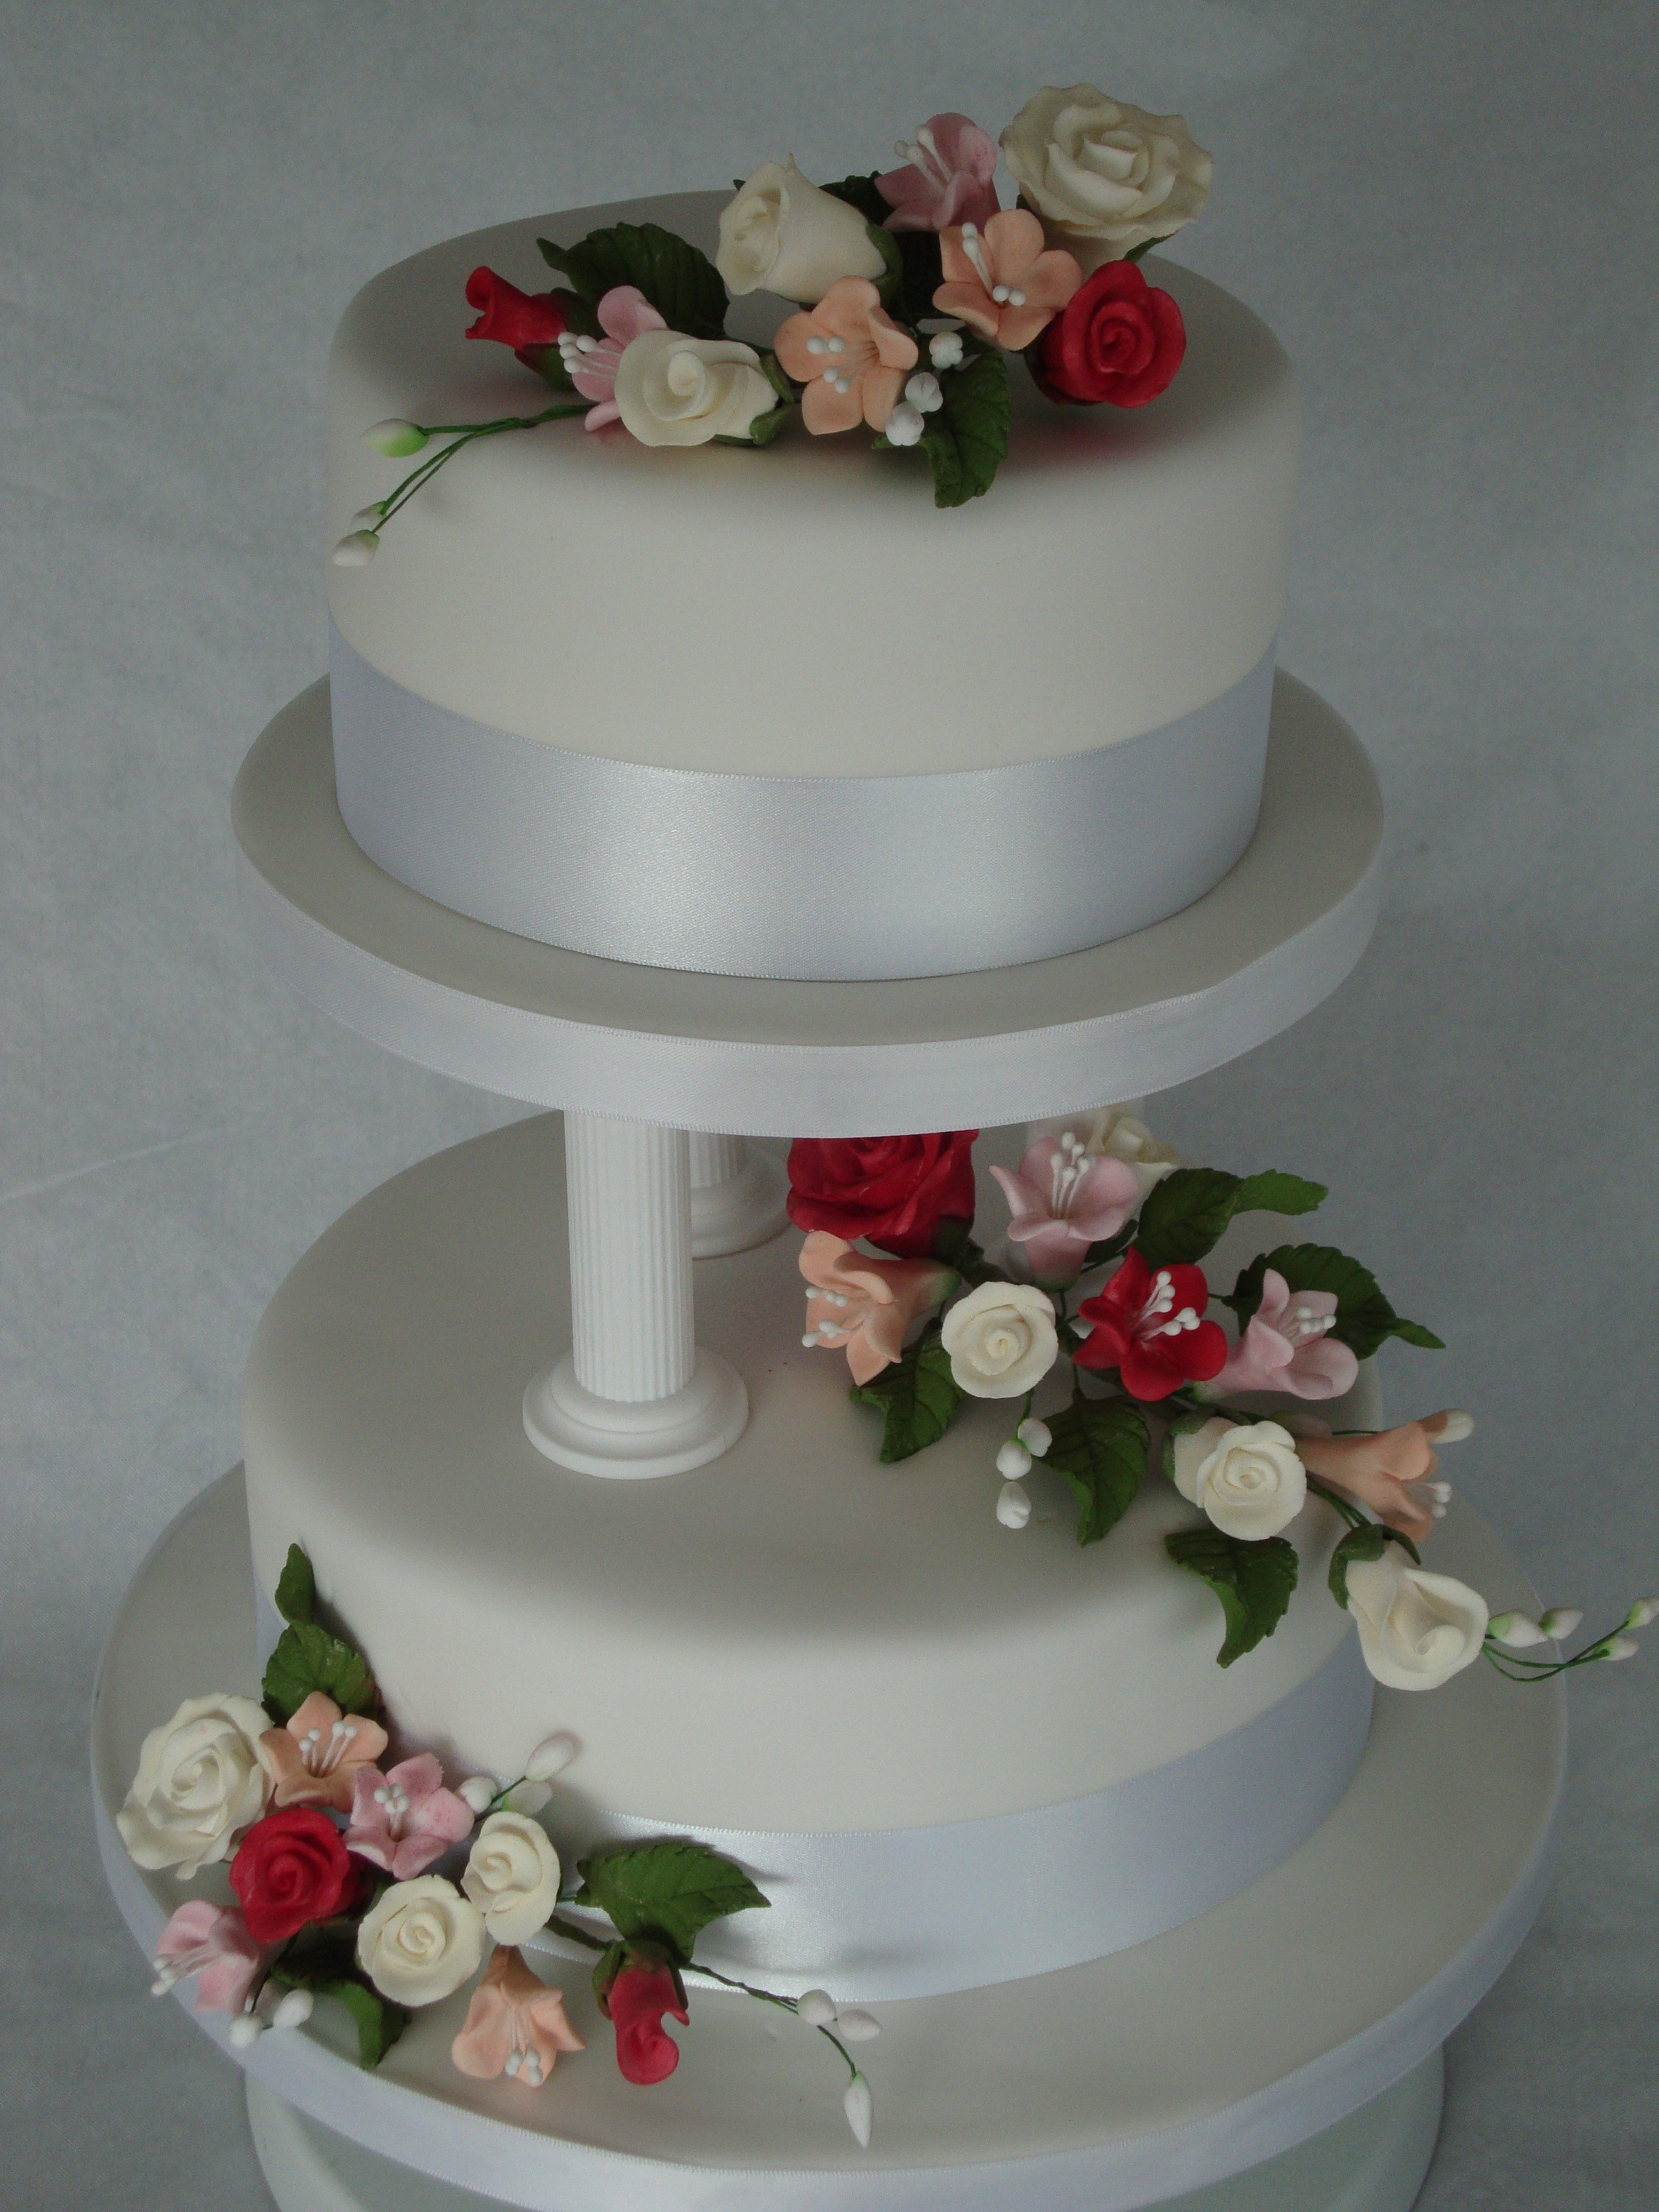 2 Tier Wedding Cakes Pictures
 2 Tier Pillars Cake Wedding Cakes Cakeology